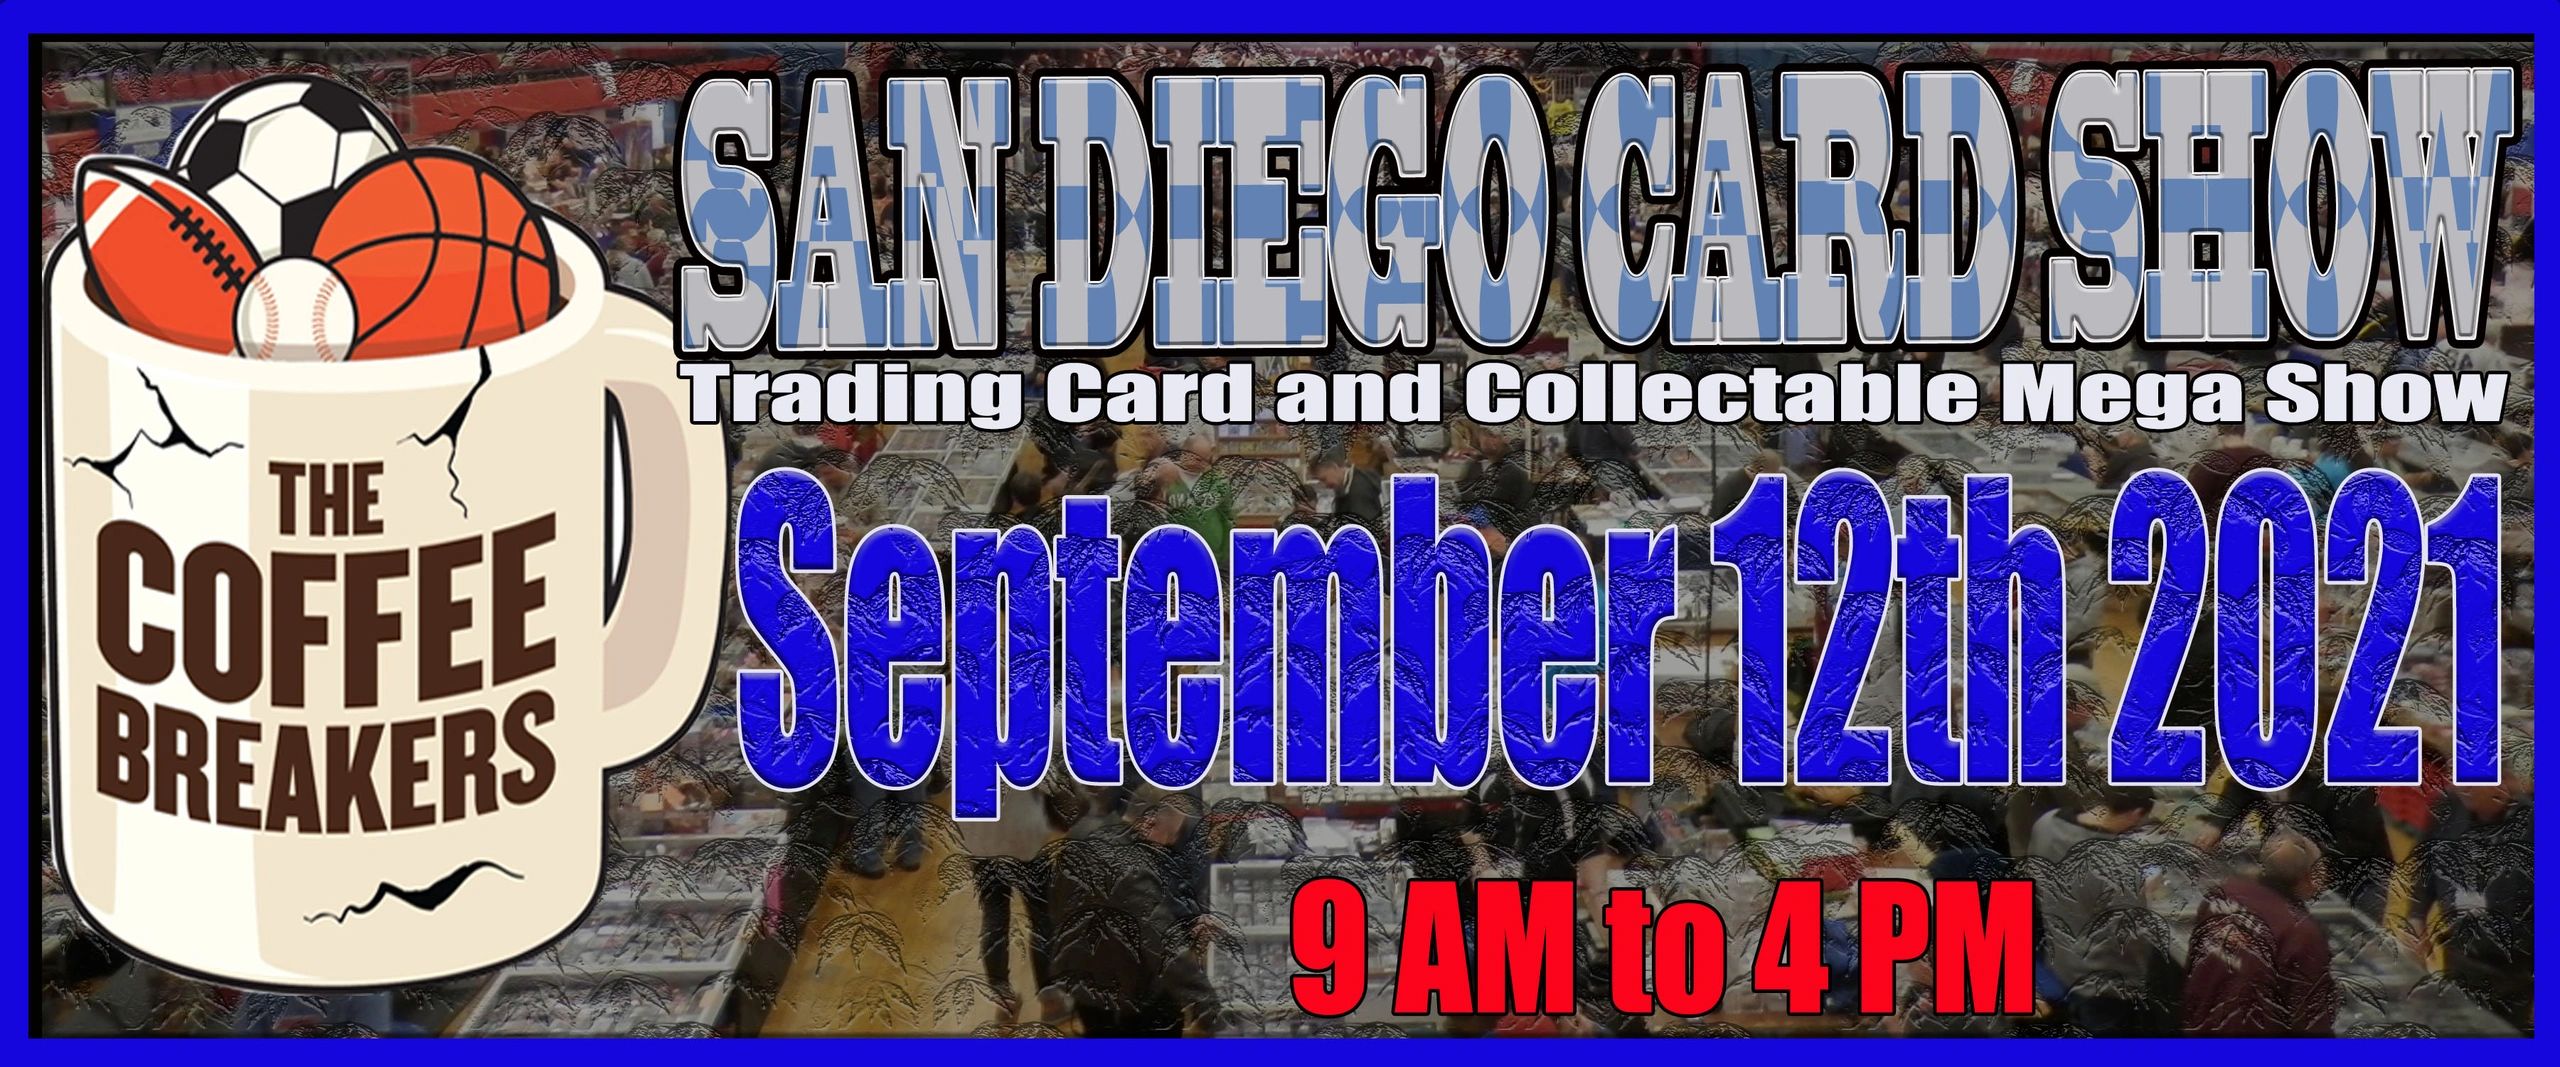 Vendor Booth San Diego Card Show